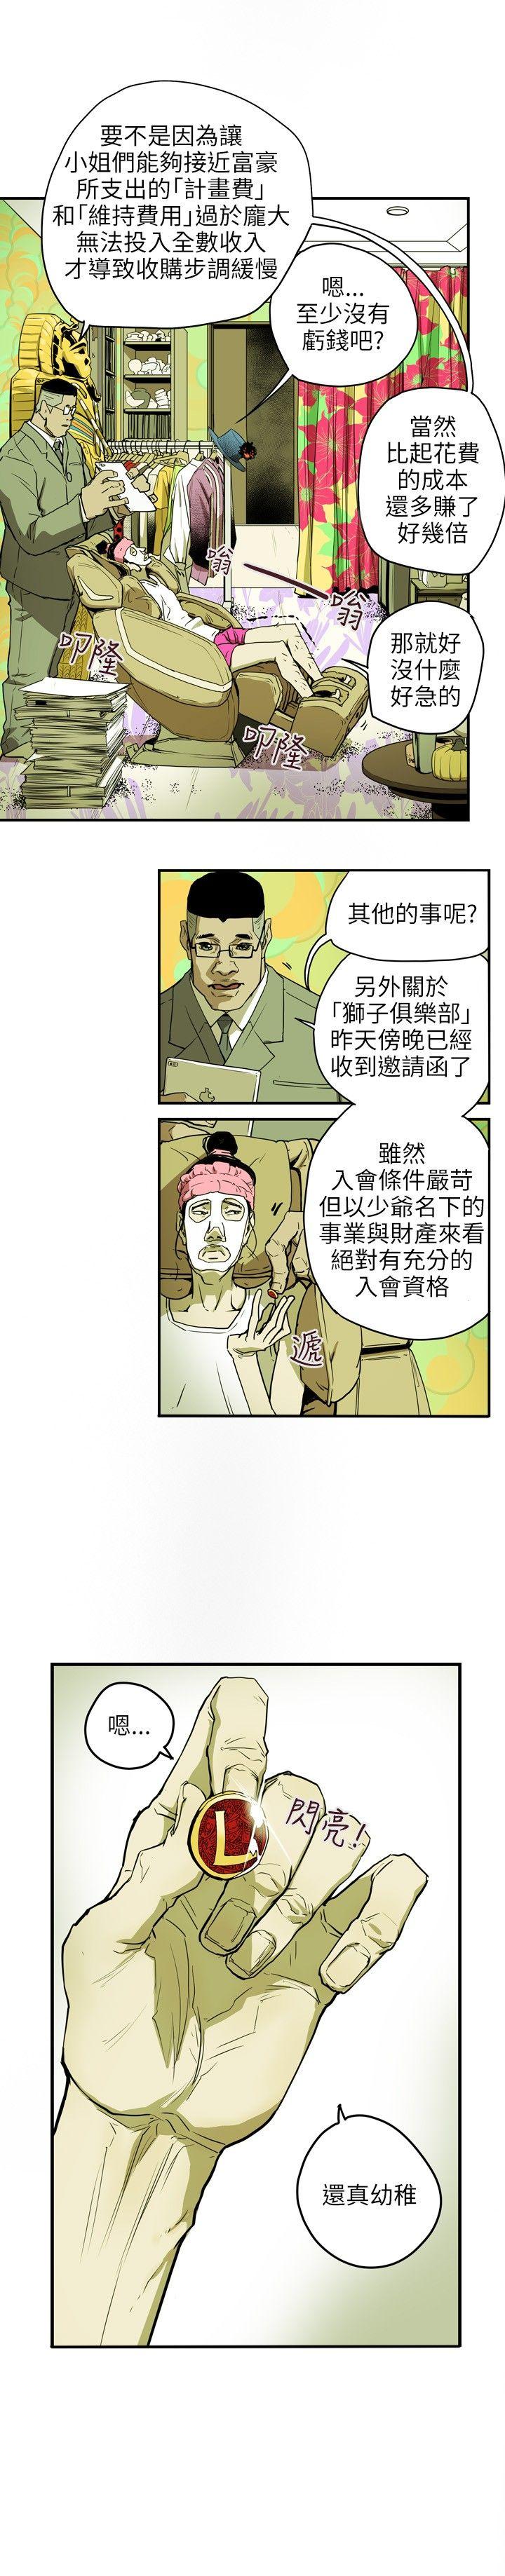 Honey trap 甜蜜陷阱  第32话 漫画图片6.jpg